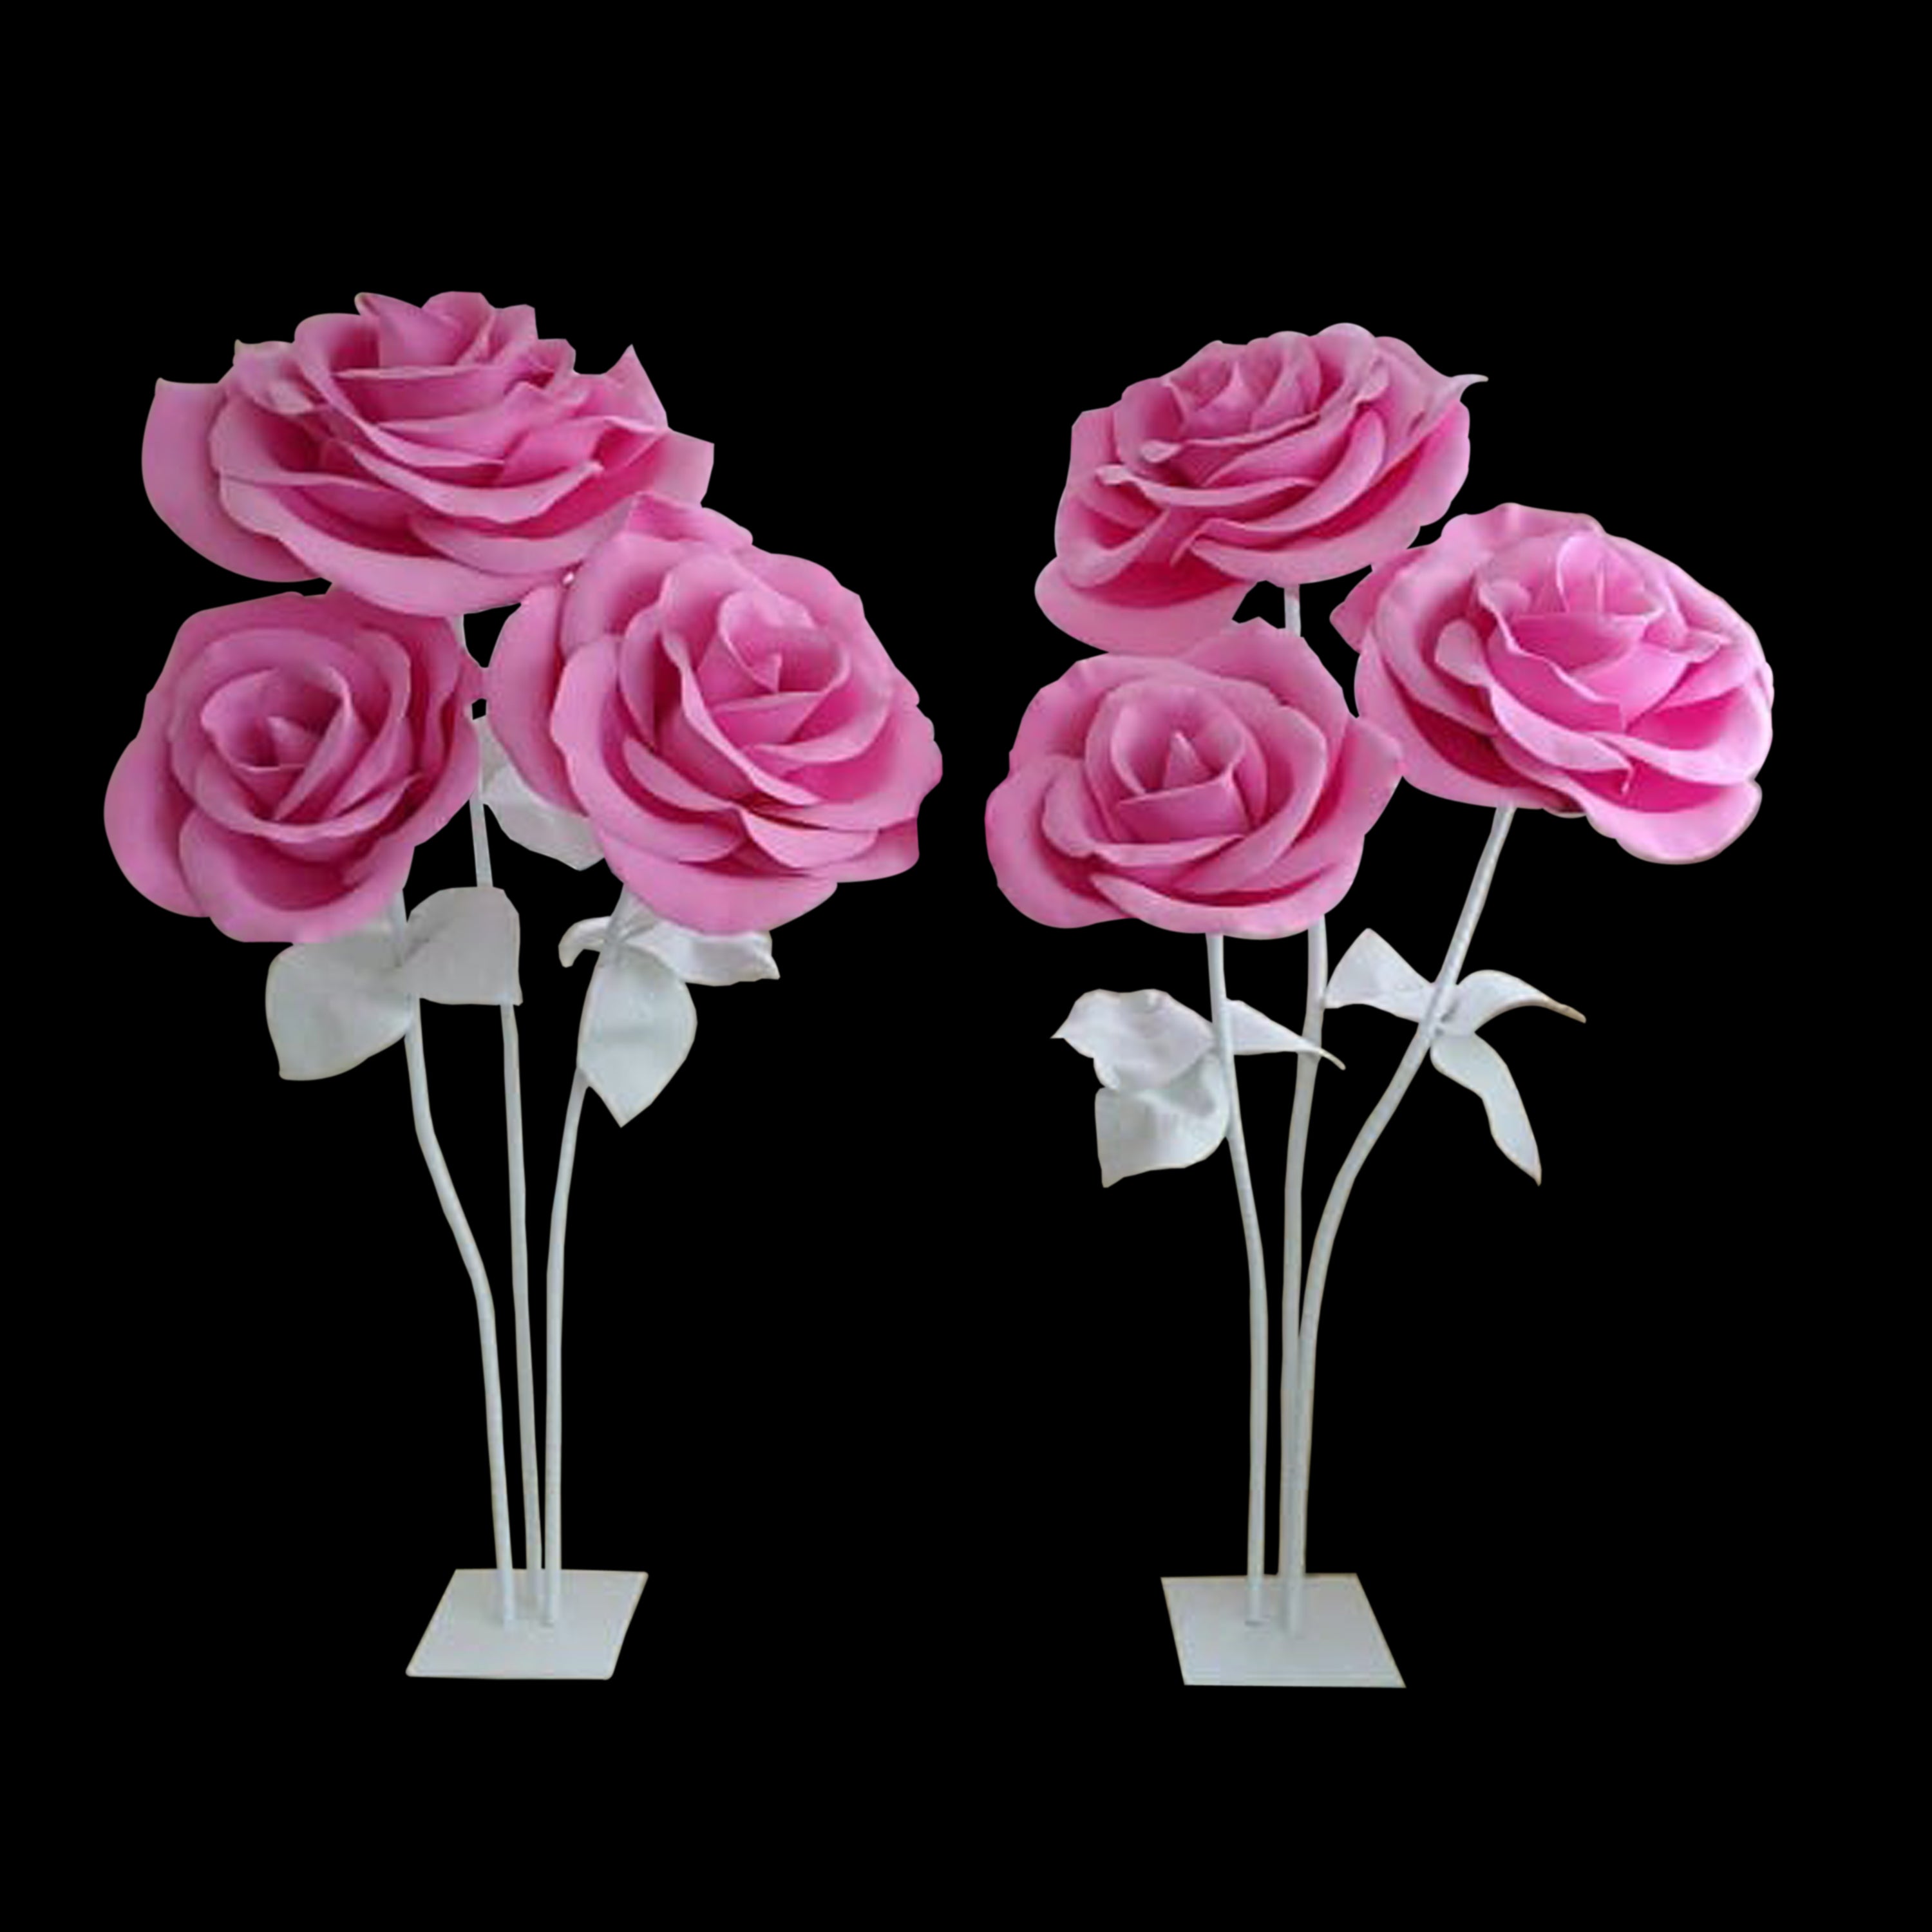 Three Rose Flowers Stand